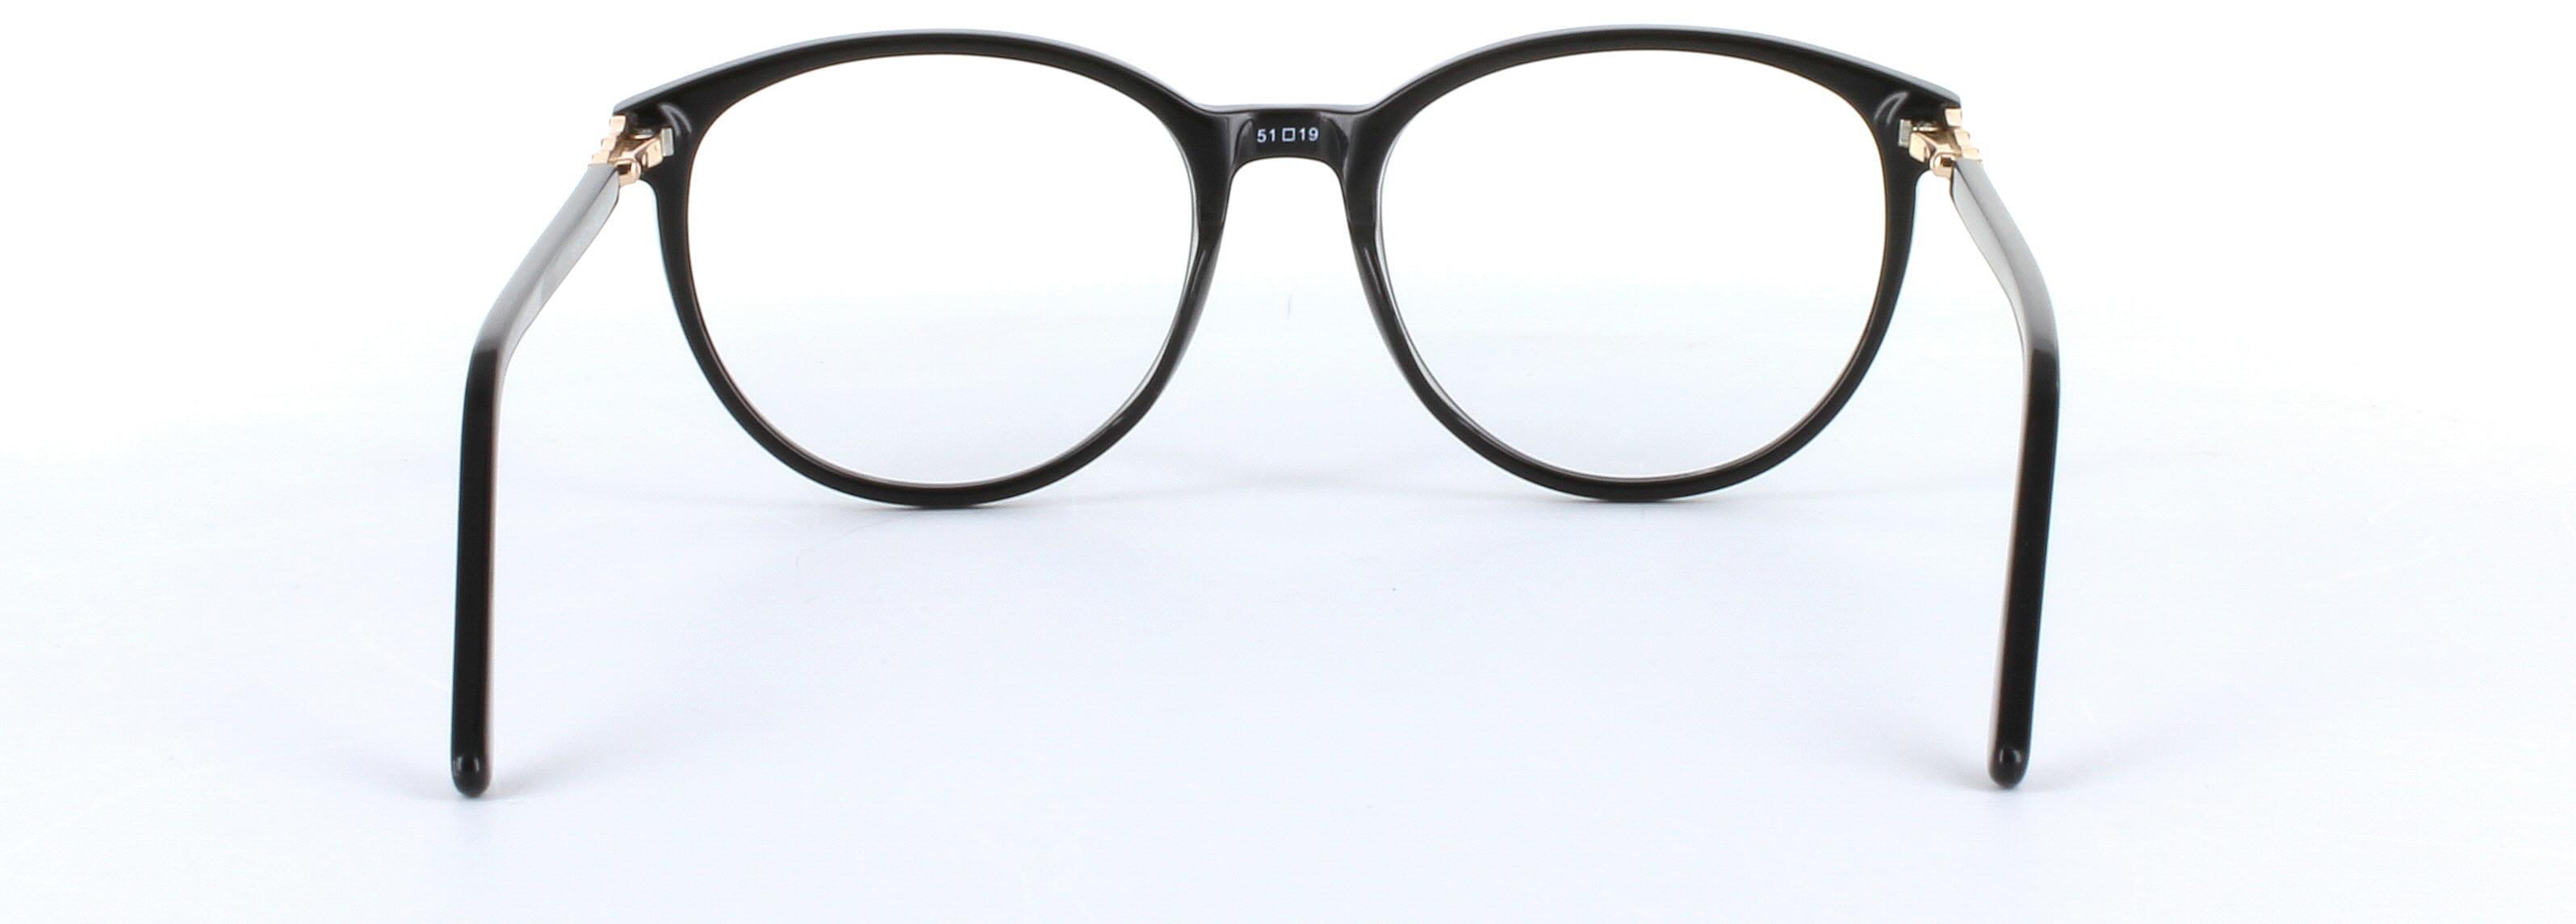 Livia Black Full Rim Round Plastic Glasses - Image View 3